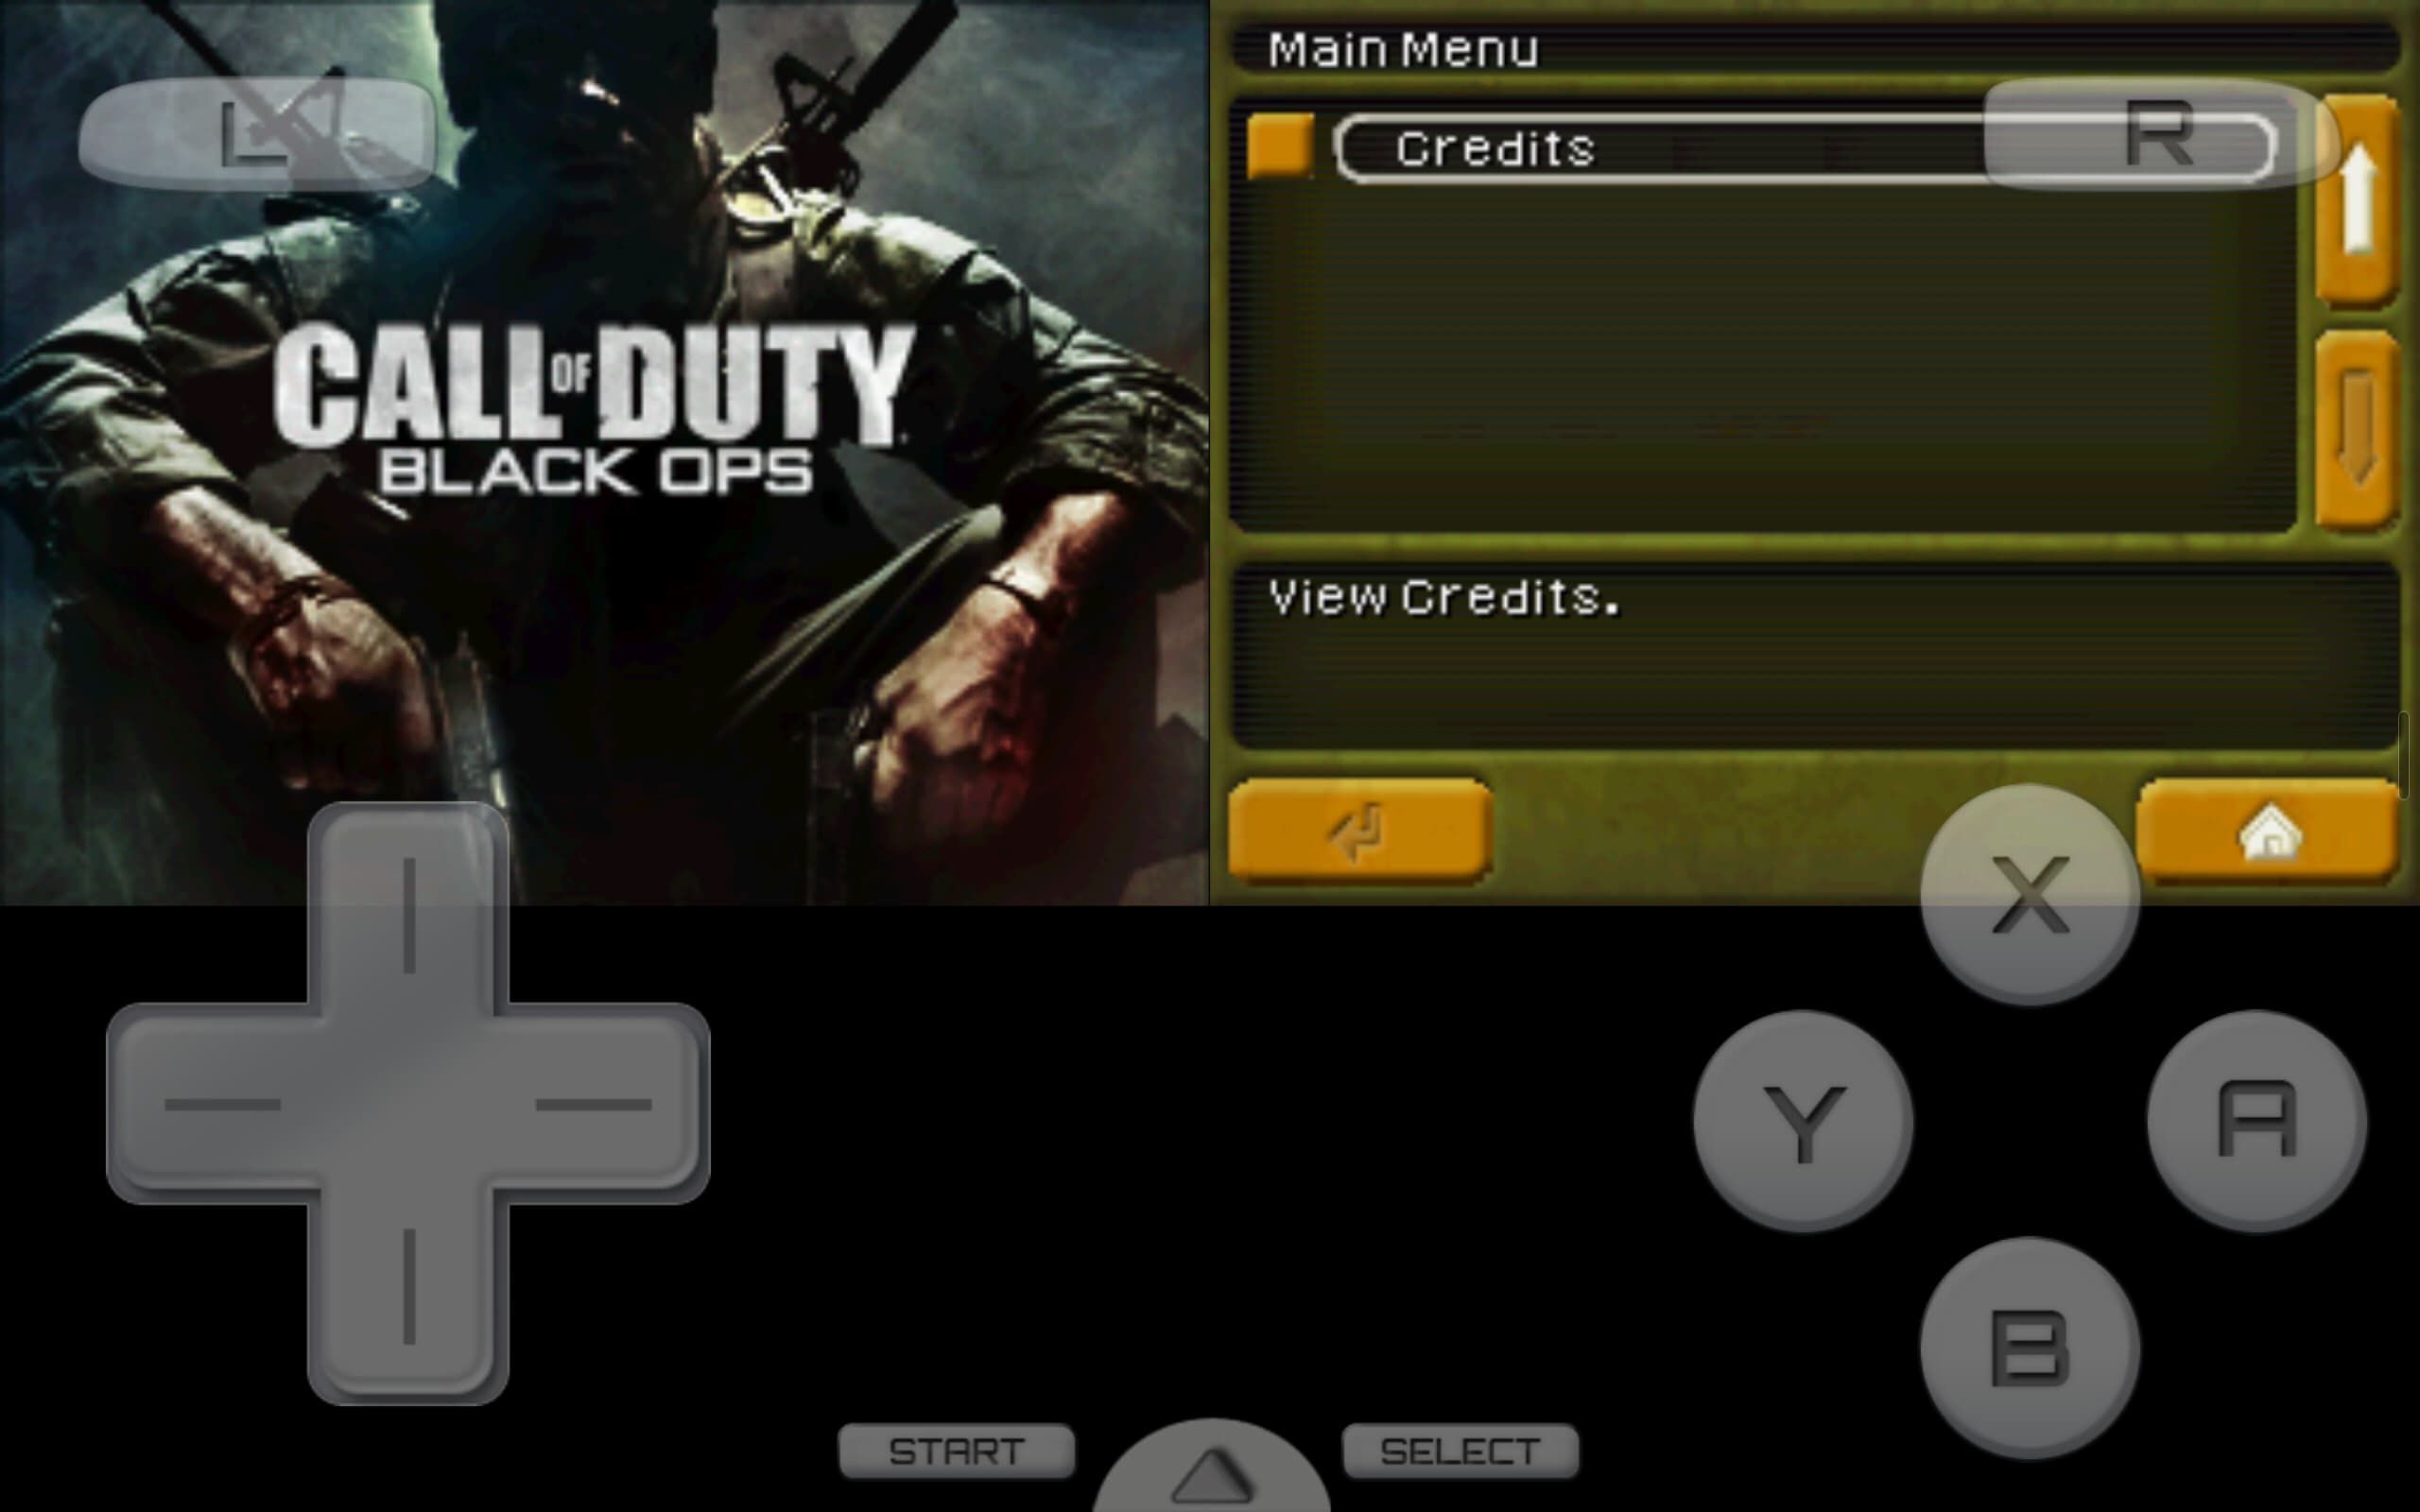 A screenshot of Call of Duty running on DraStic DS emulator.